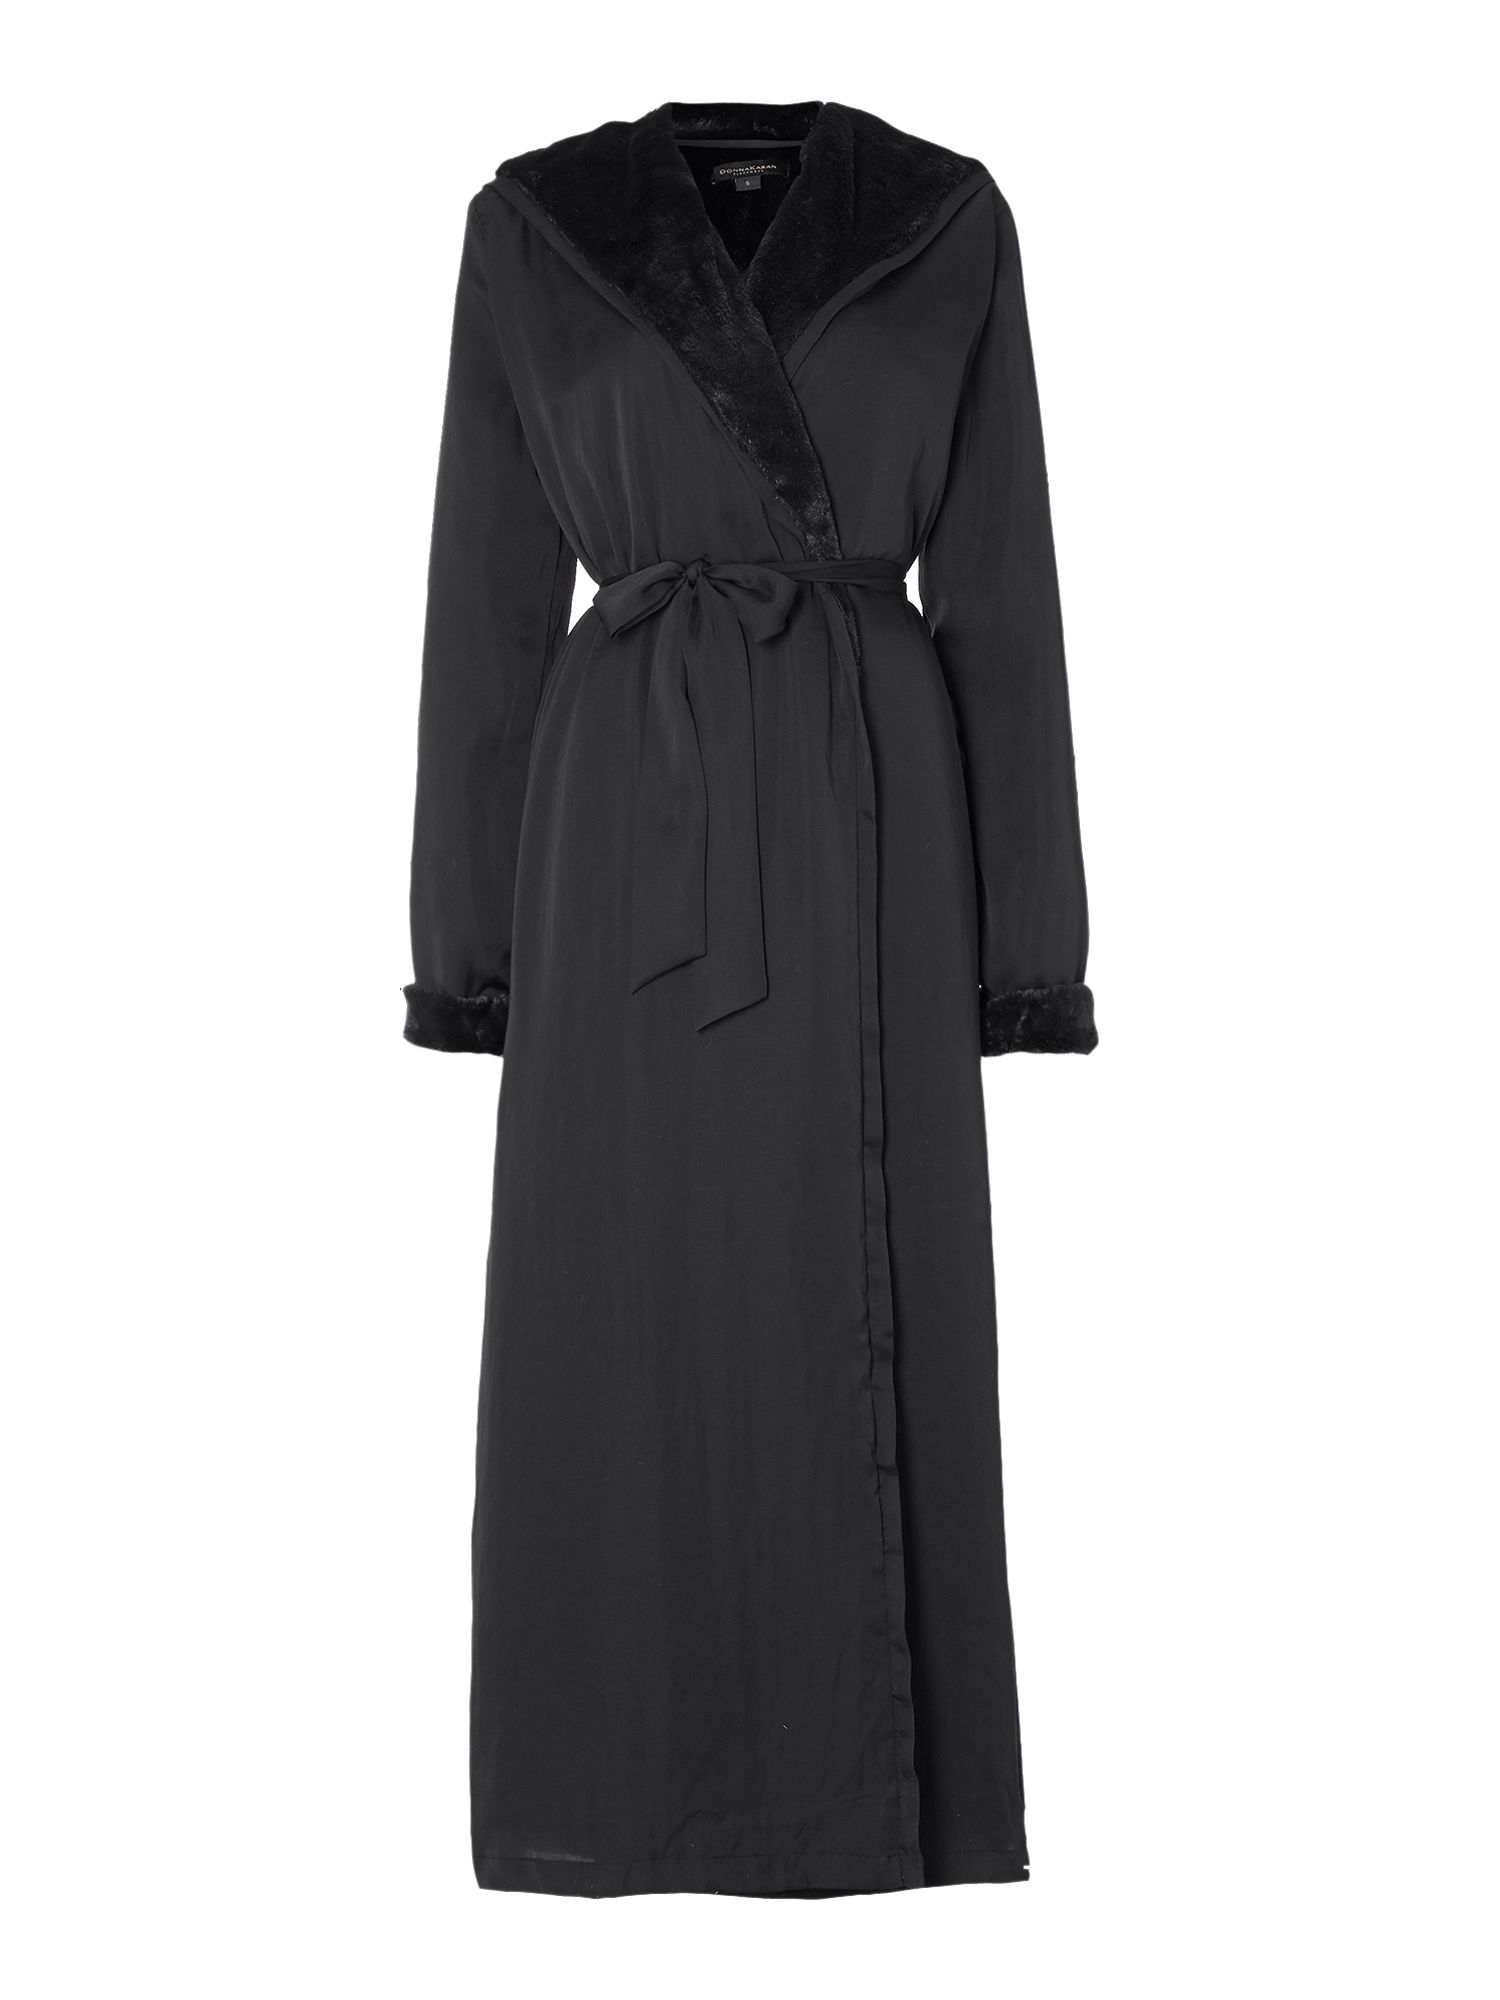 Donna Karan New York Long Line Luxurious Robe in Black | Lyst